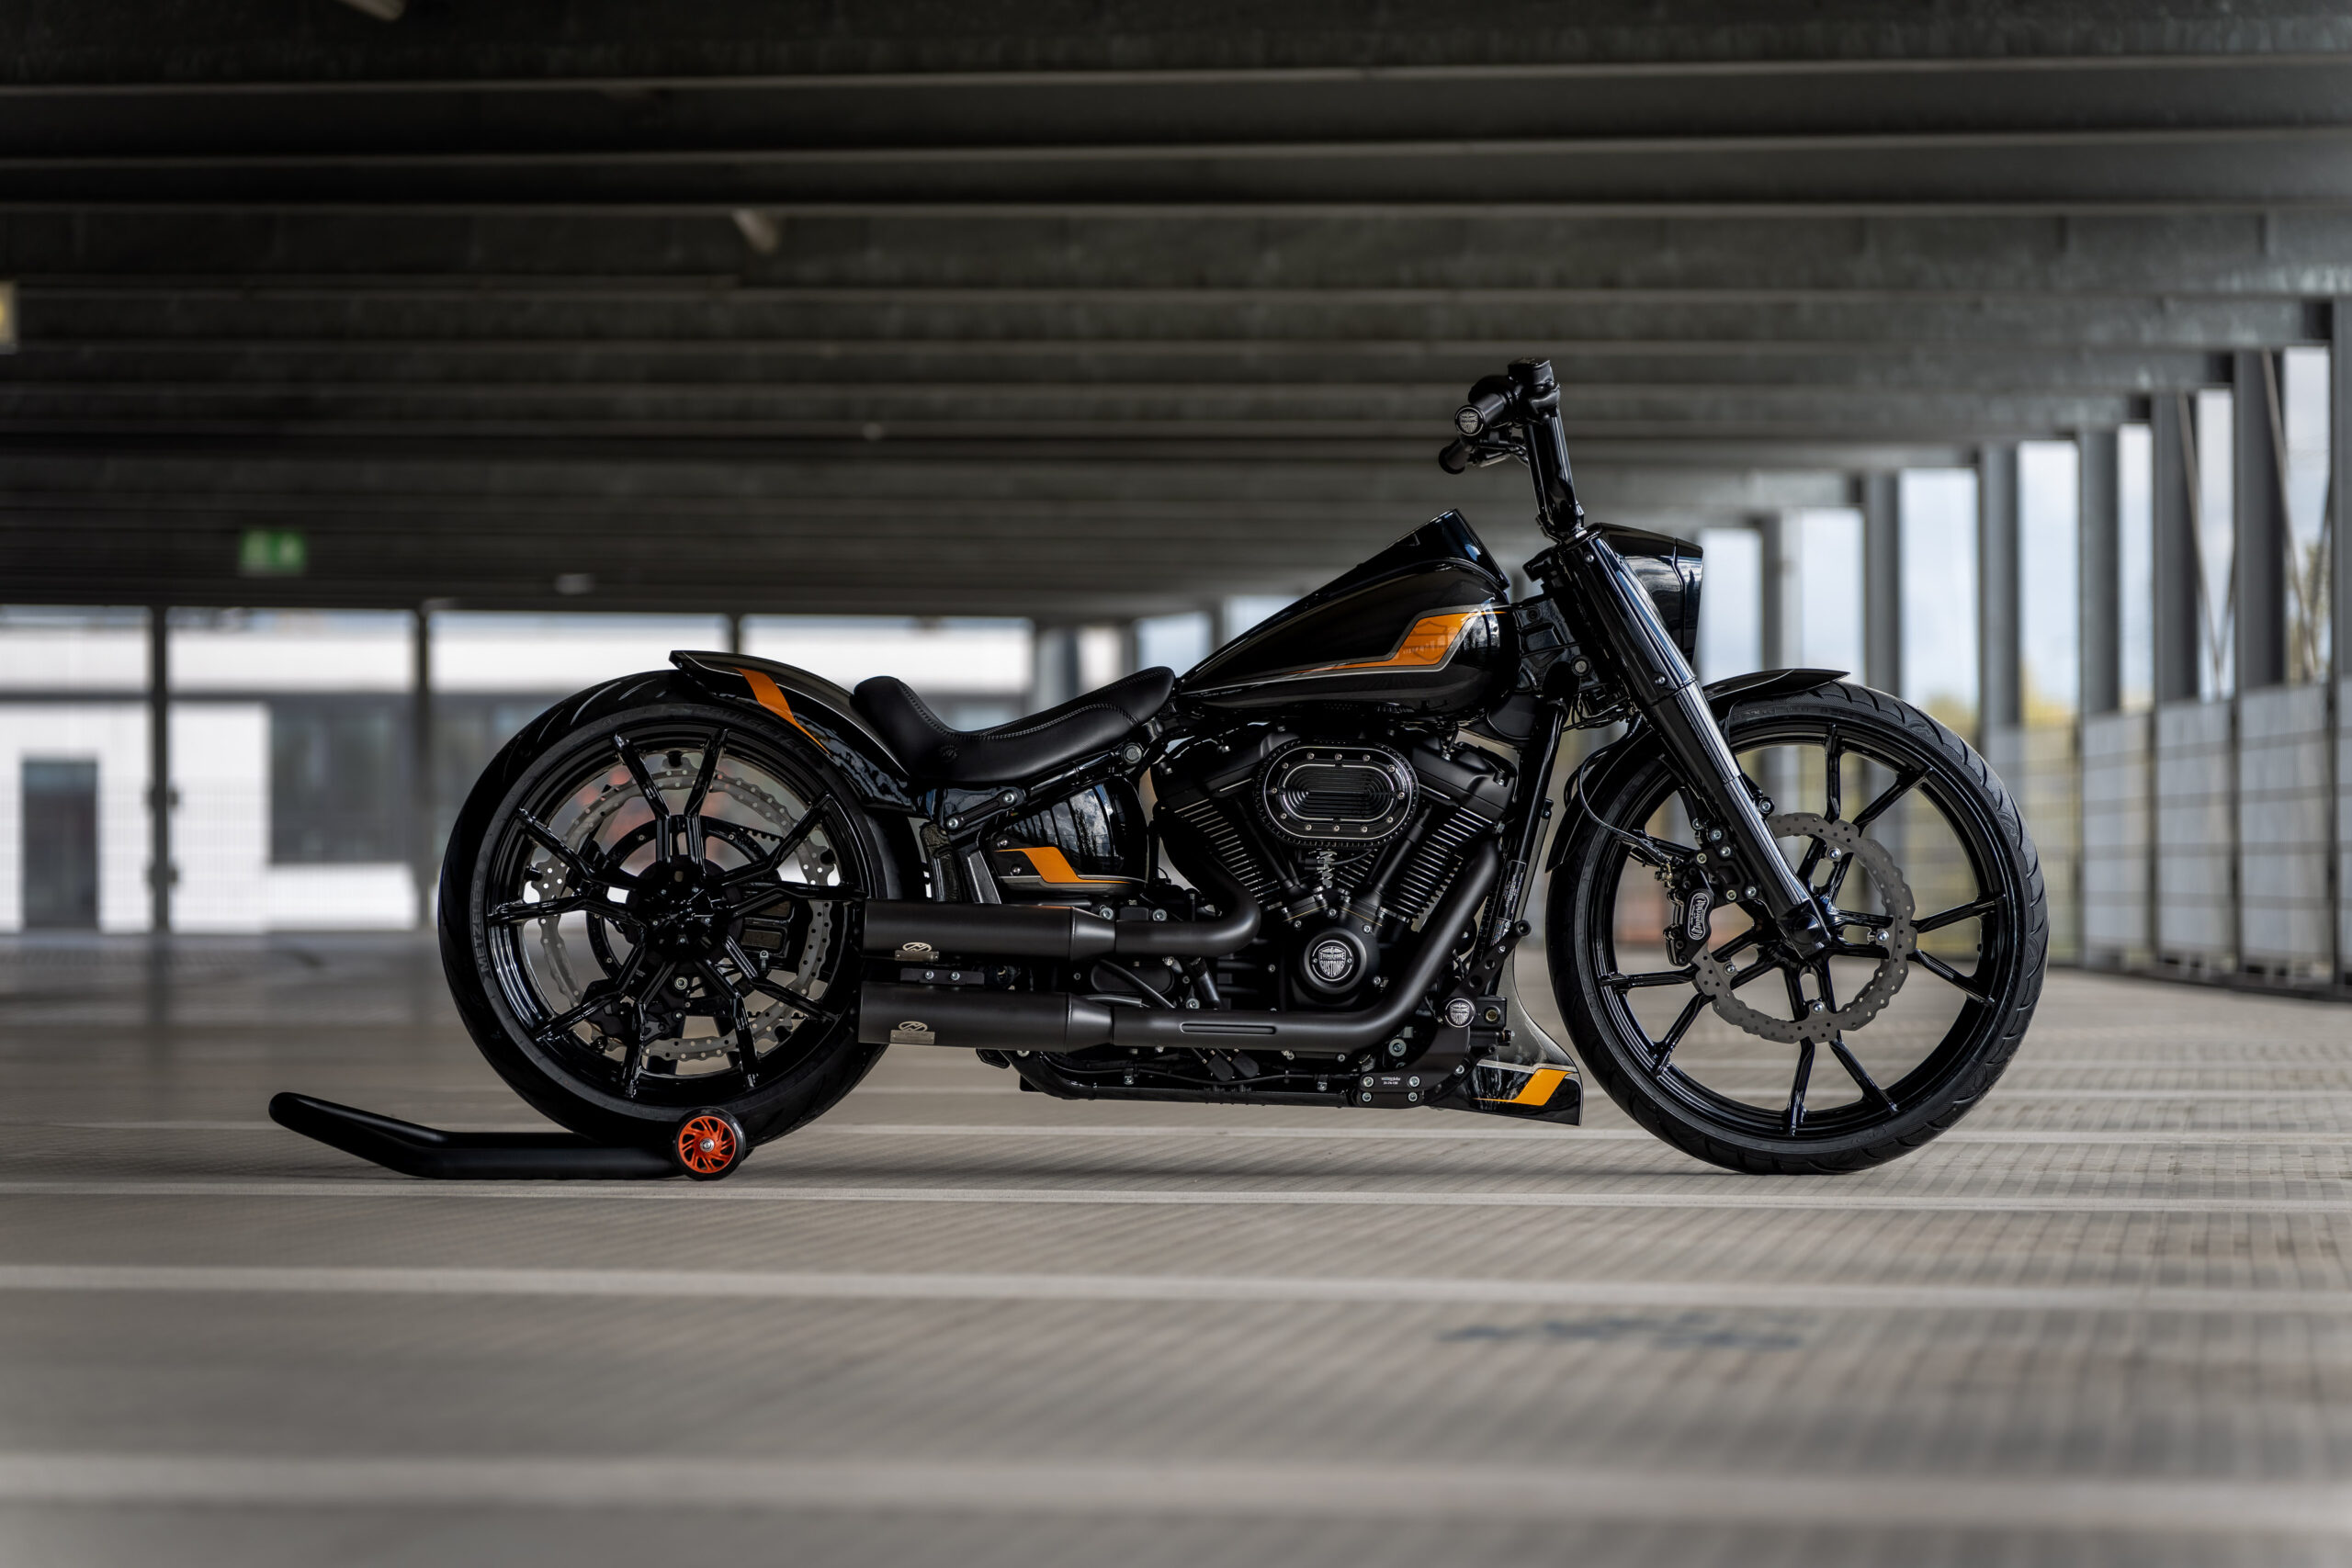 Customized Harley-Davidson Fat Boy motorcycles by Thunderbike